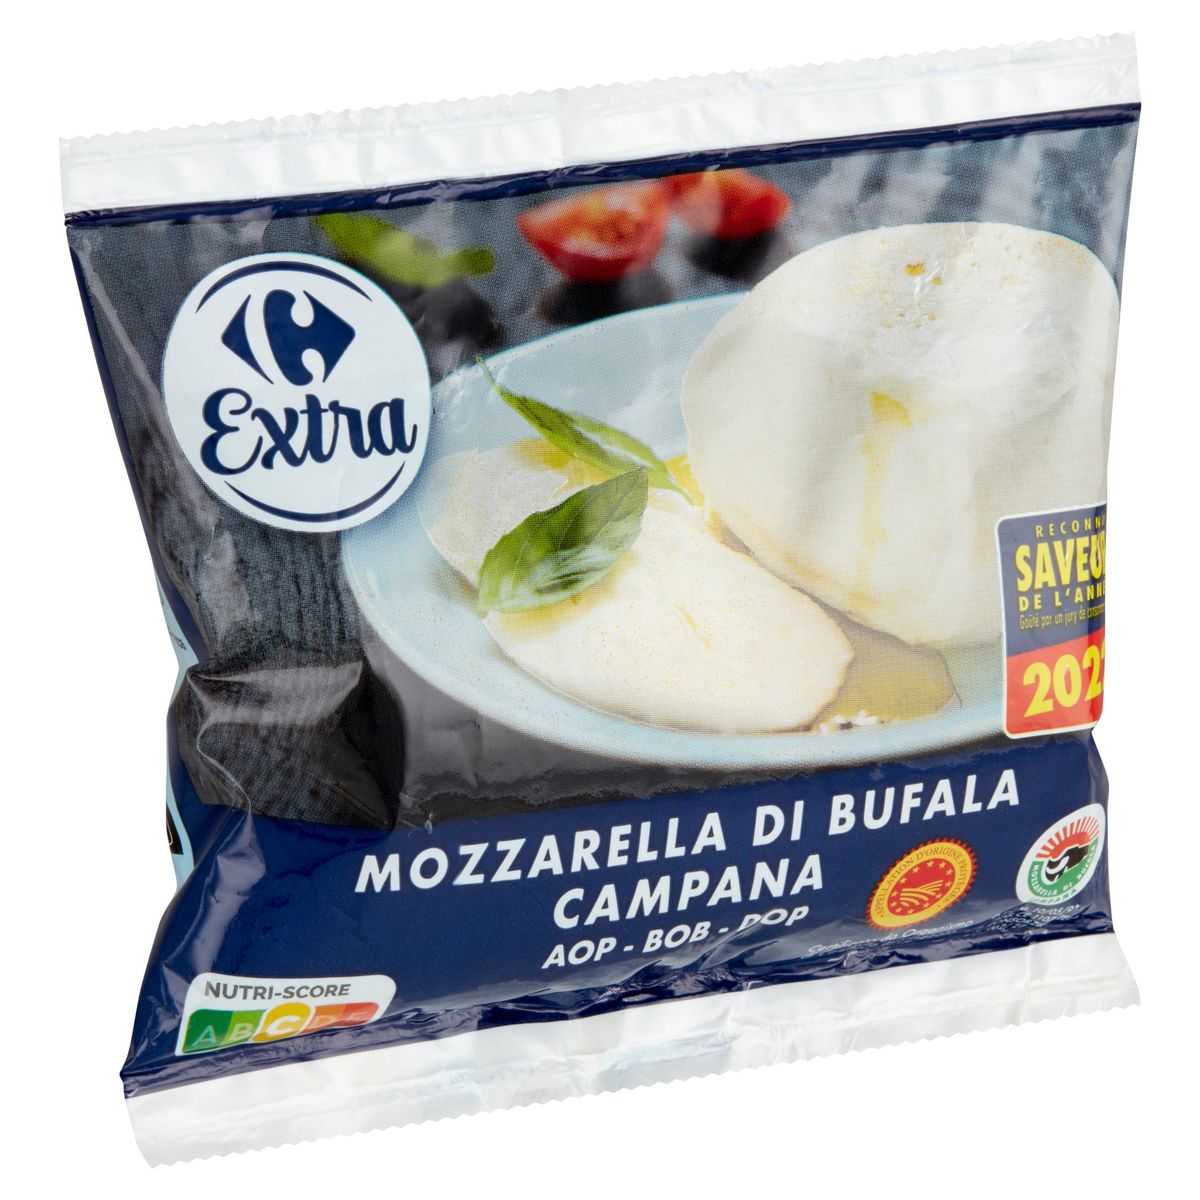 Carrefour Mozzarella di Bufala Campana AOP 125 g